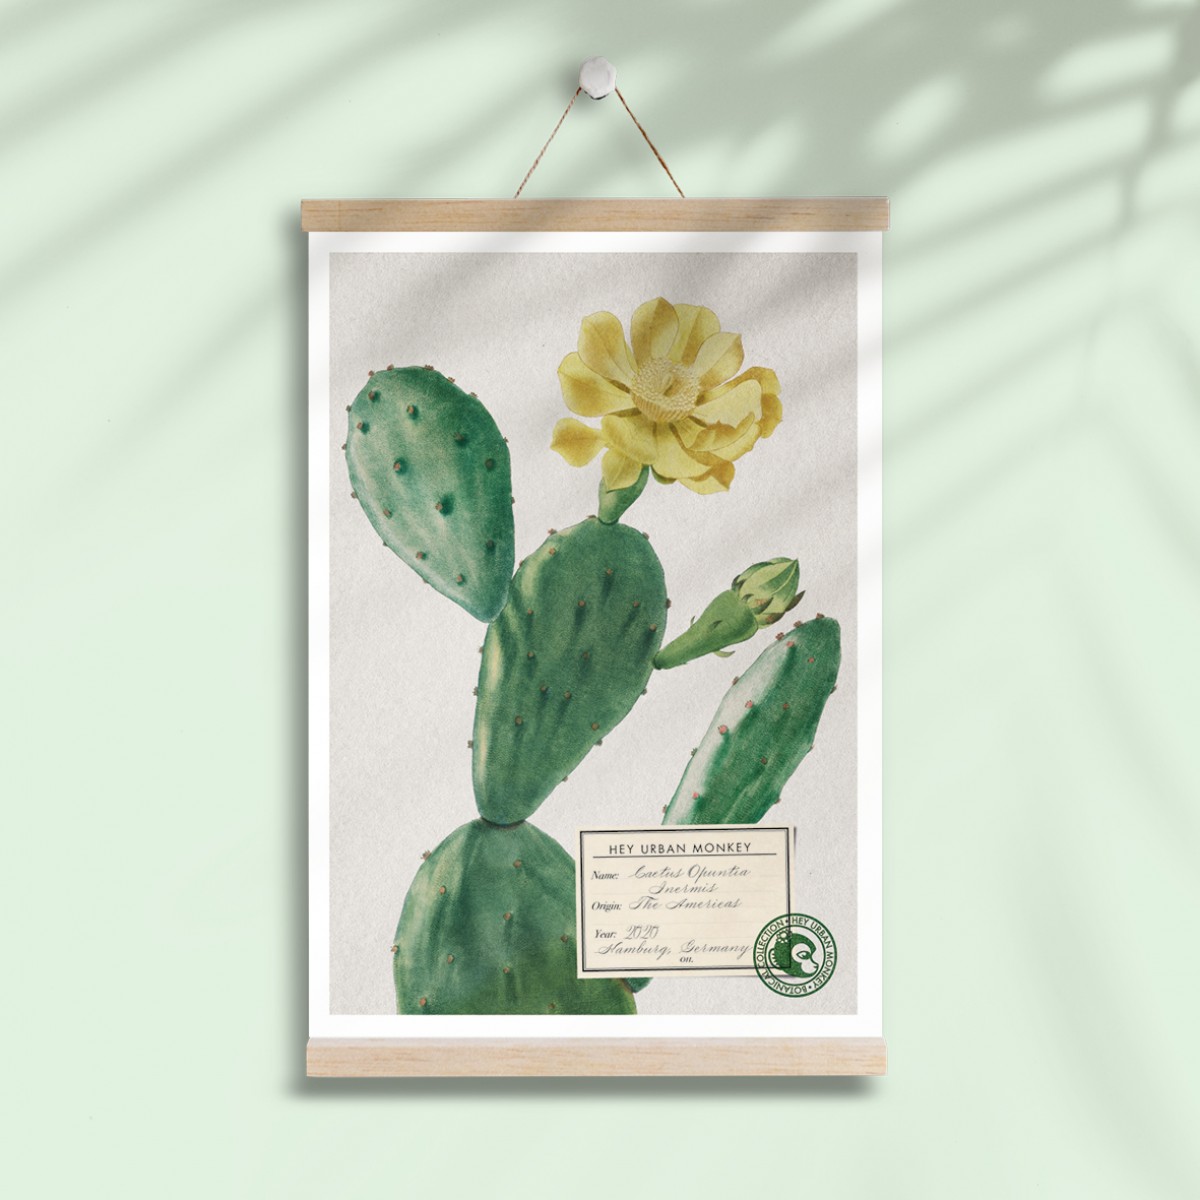 Hey Urban Monkey - A4 Poster - „Cactus Opuntia Inermis“